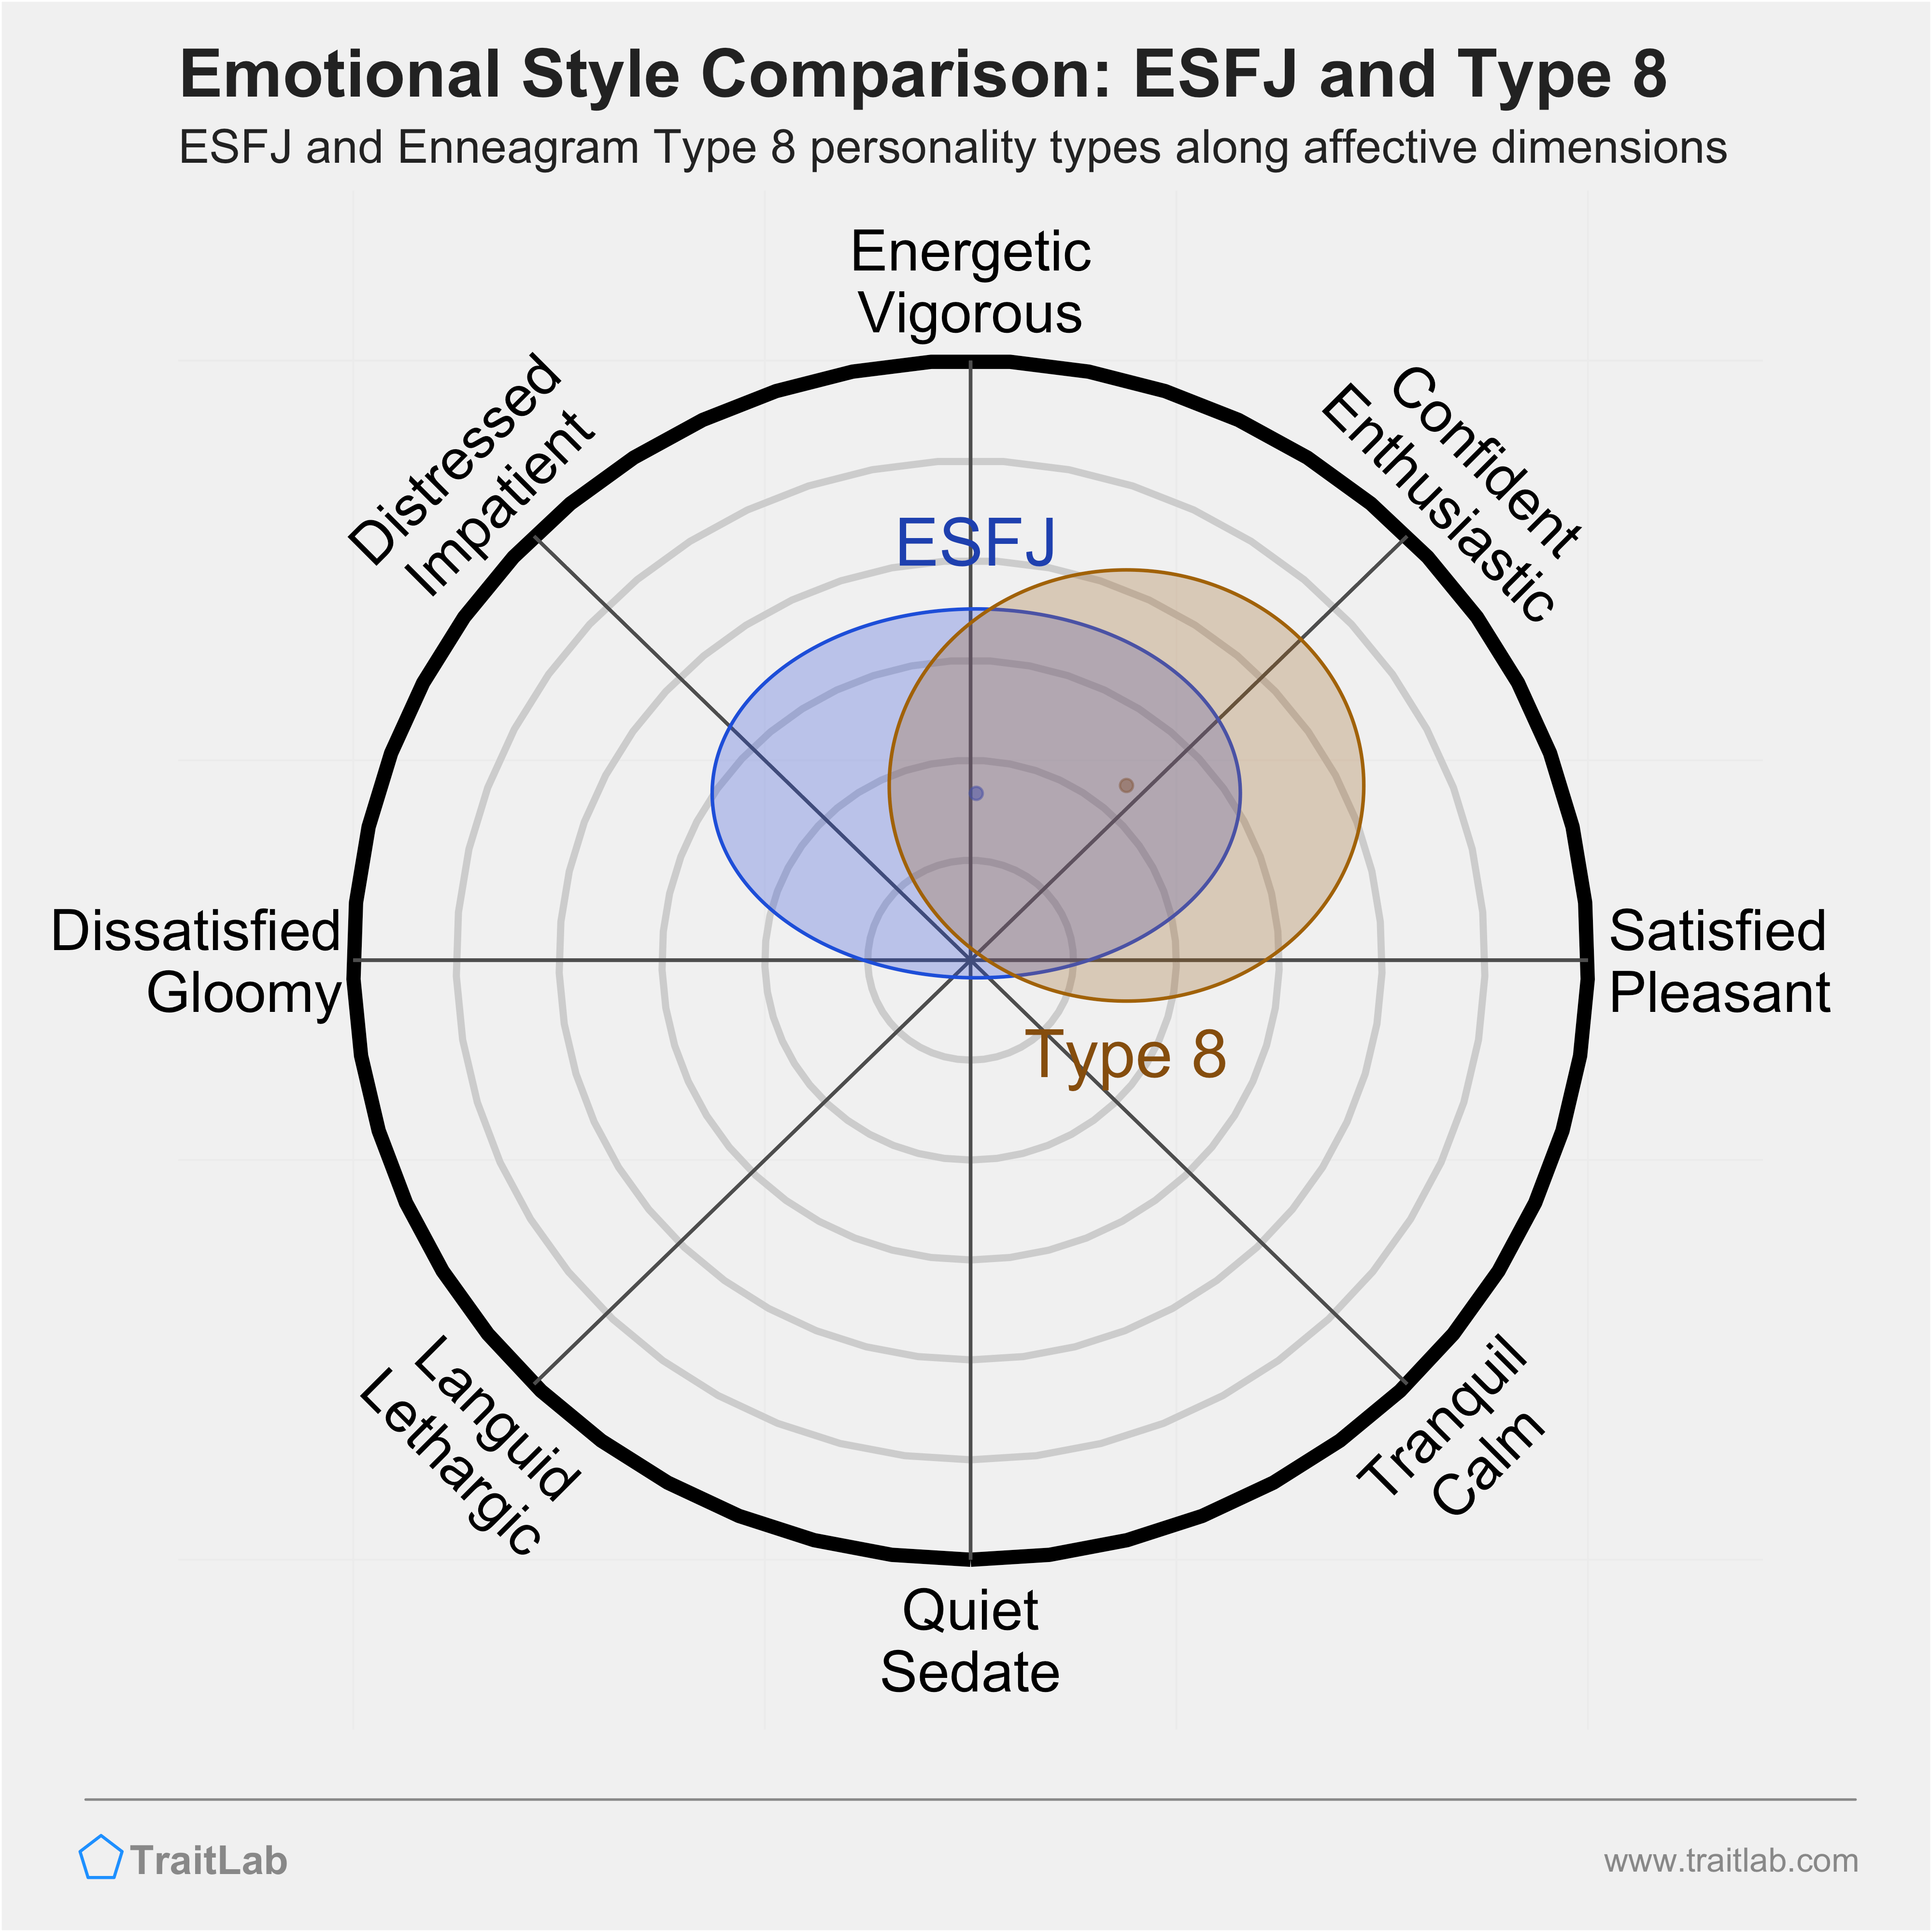 ESFJ and Type 8 comparison across emotional (affective) dimensions